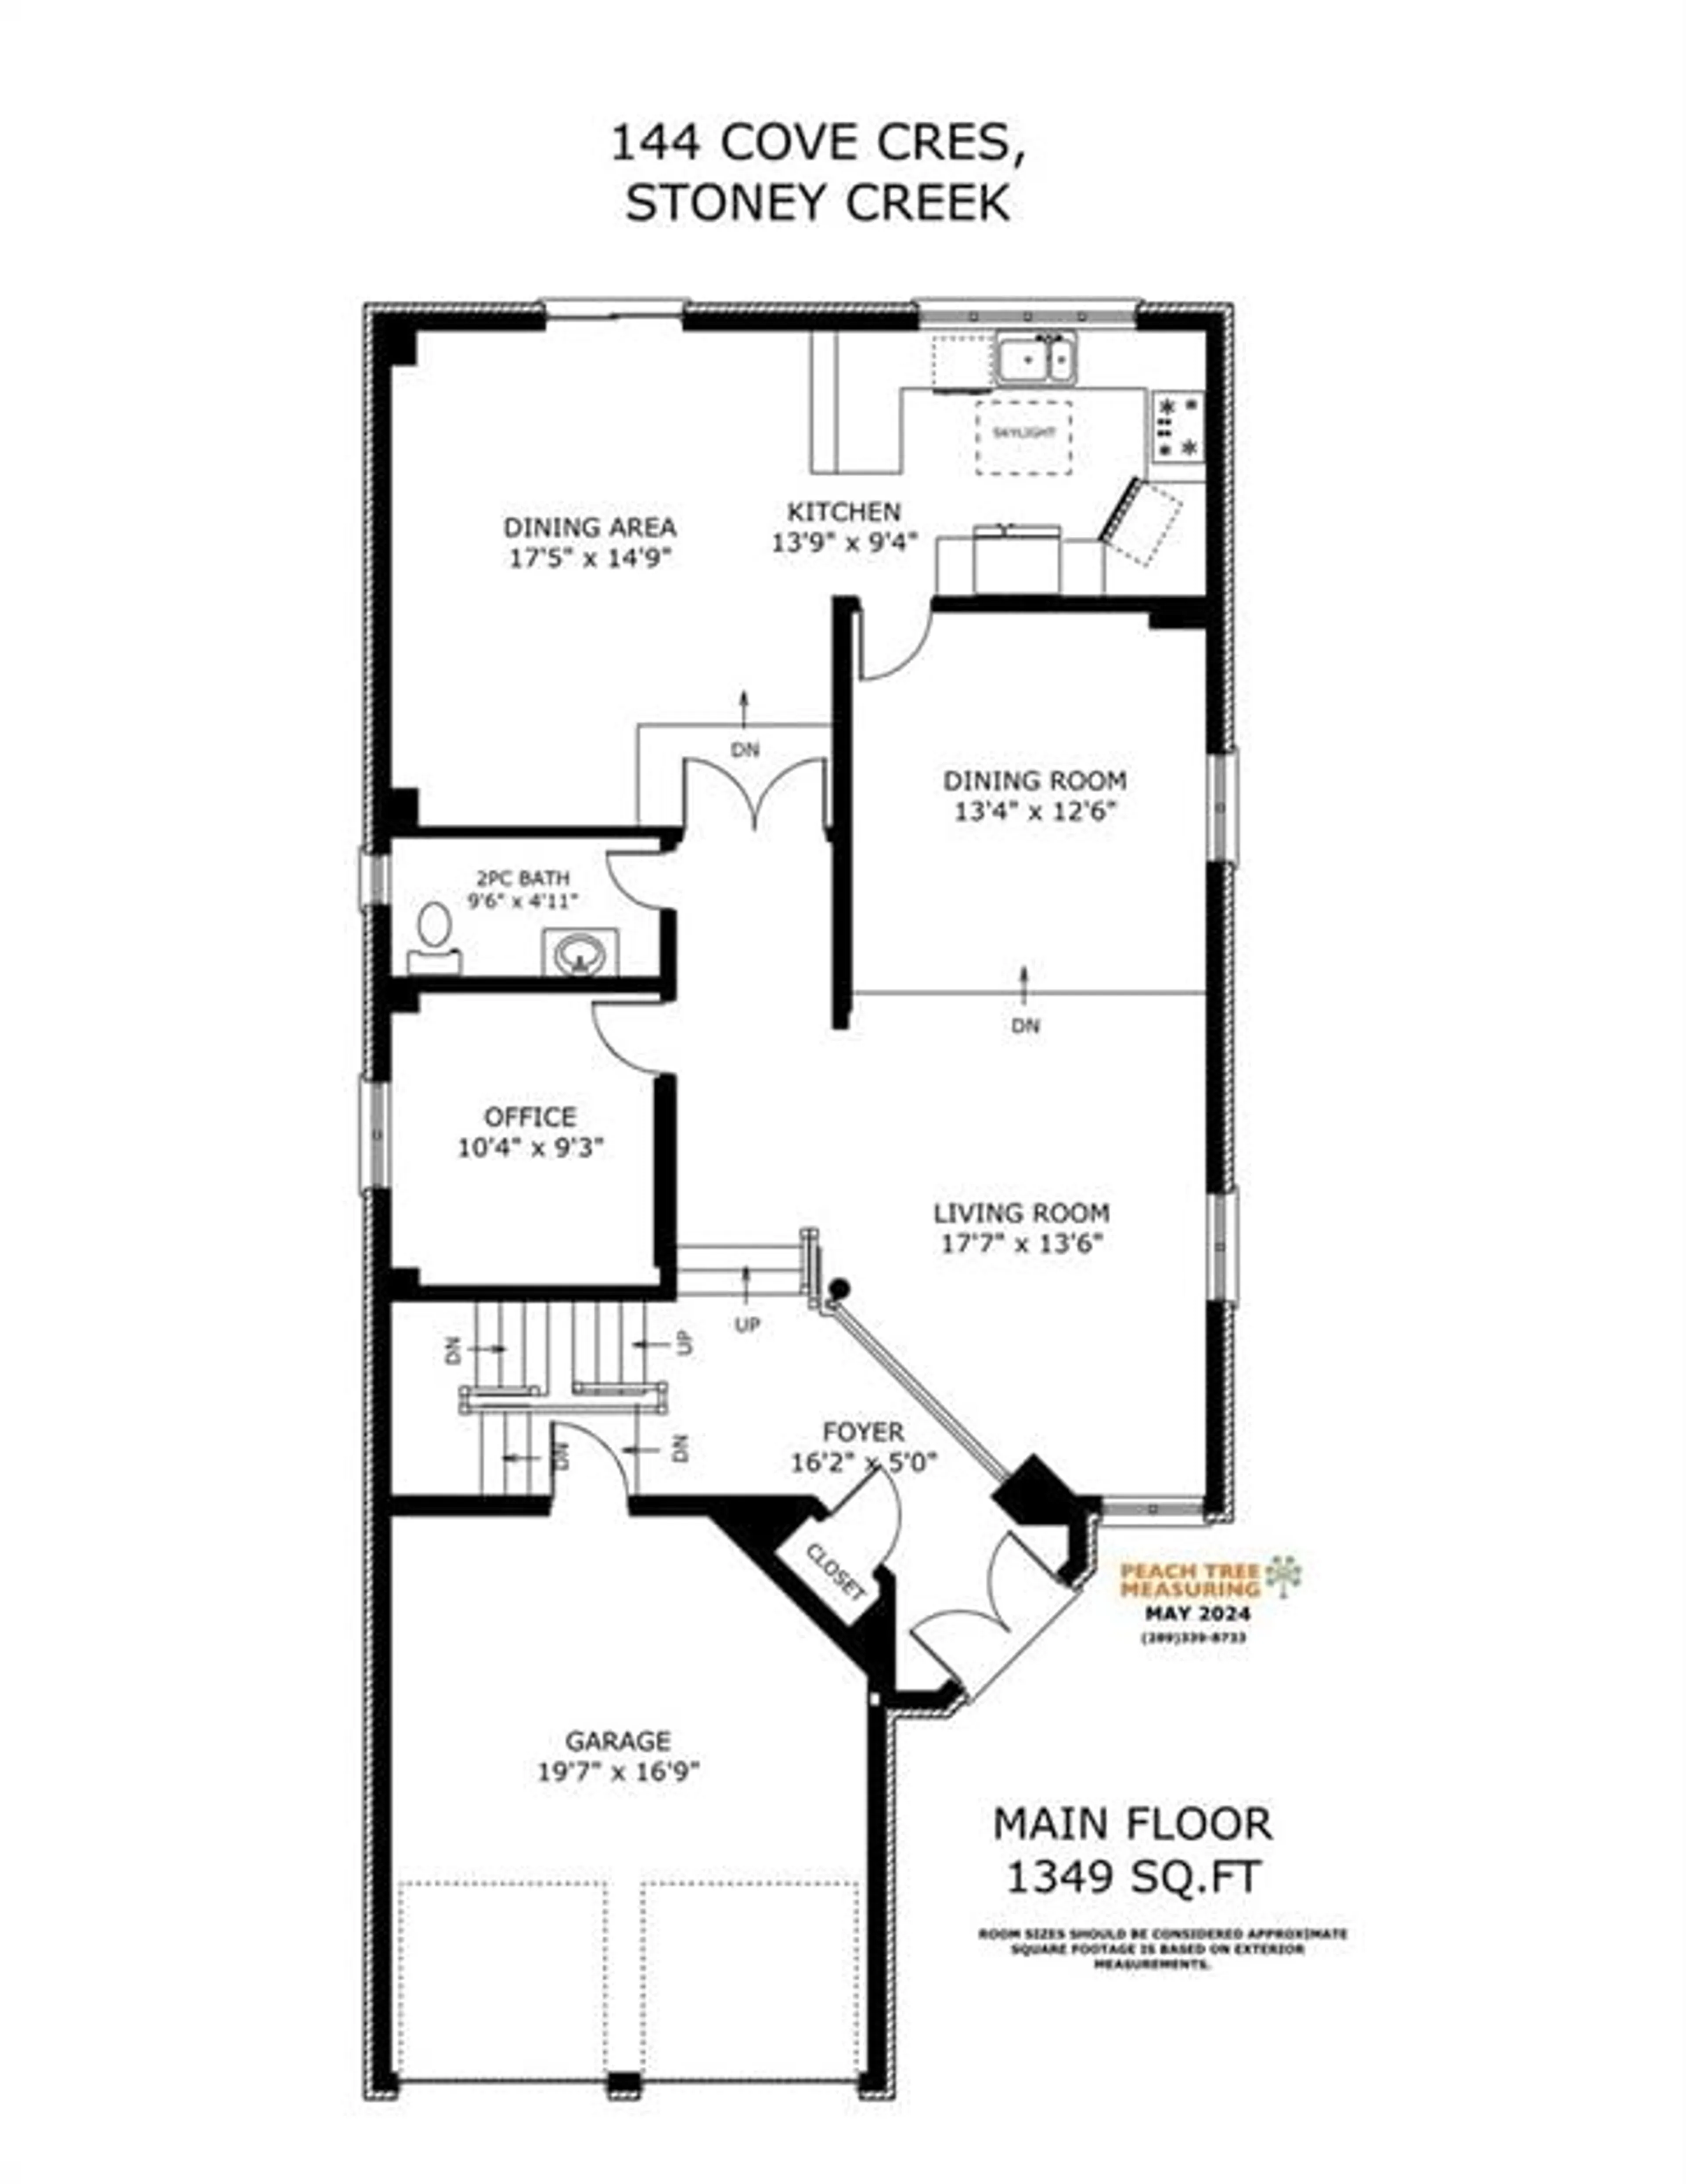 Floor plan for 144 COVE Cres, Stoney Creek Ontario L8E 5A2